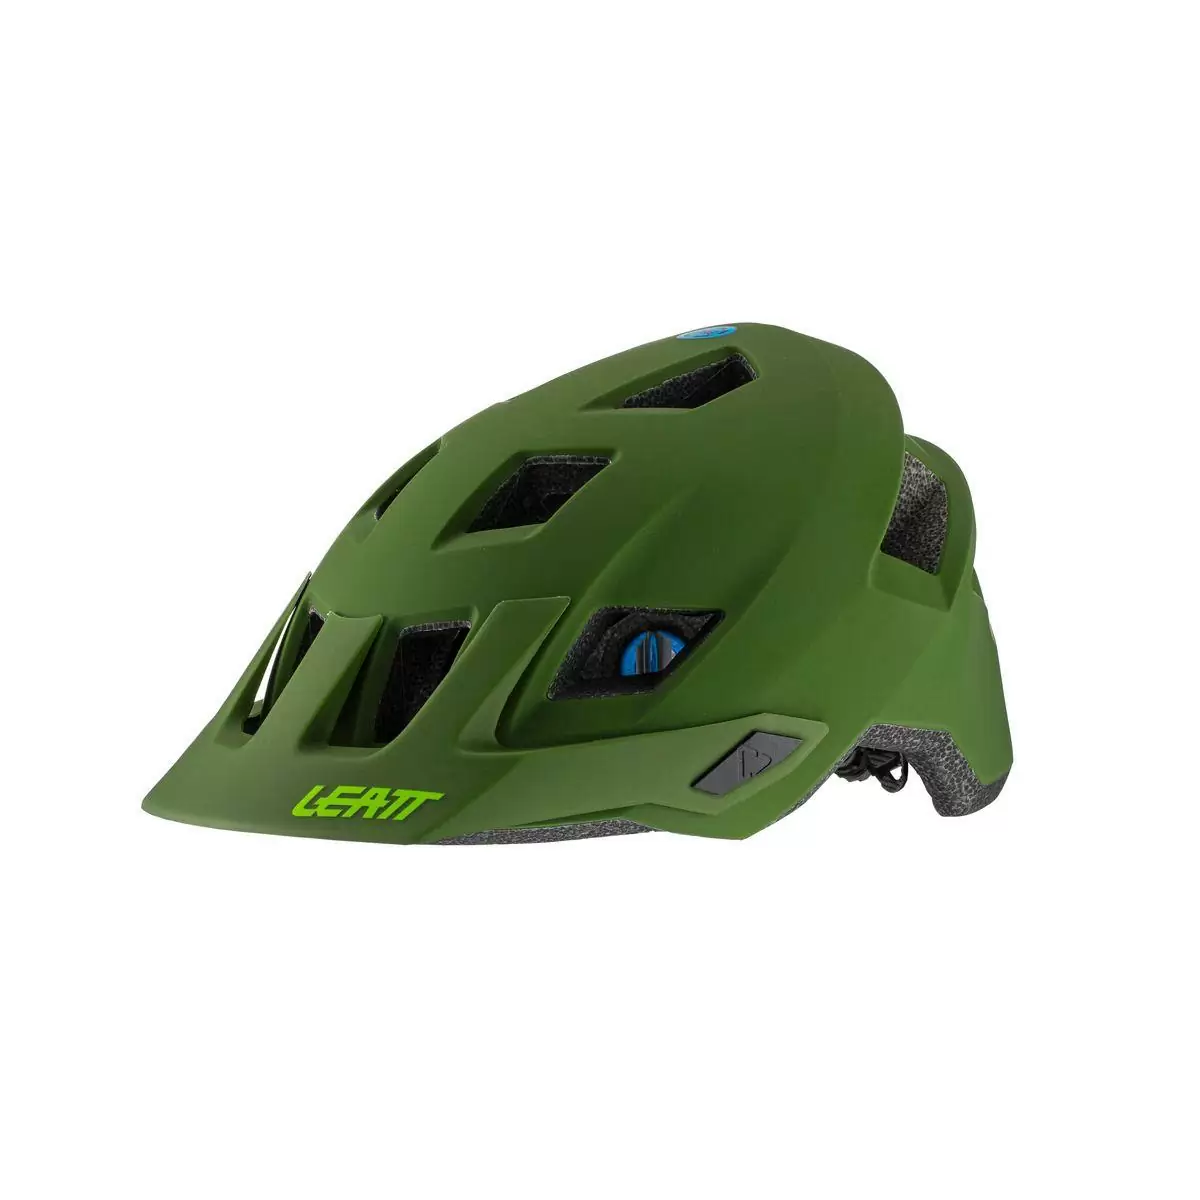 Helmet MTB 1.0 Turbine Technology Green Size S (51-55cm) - image